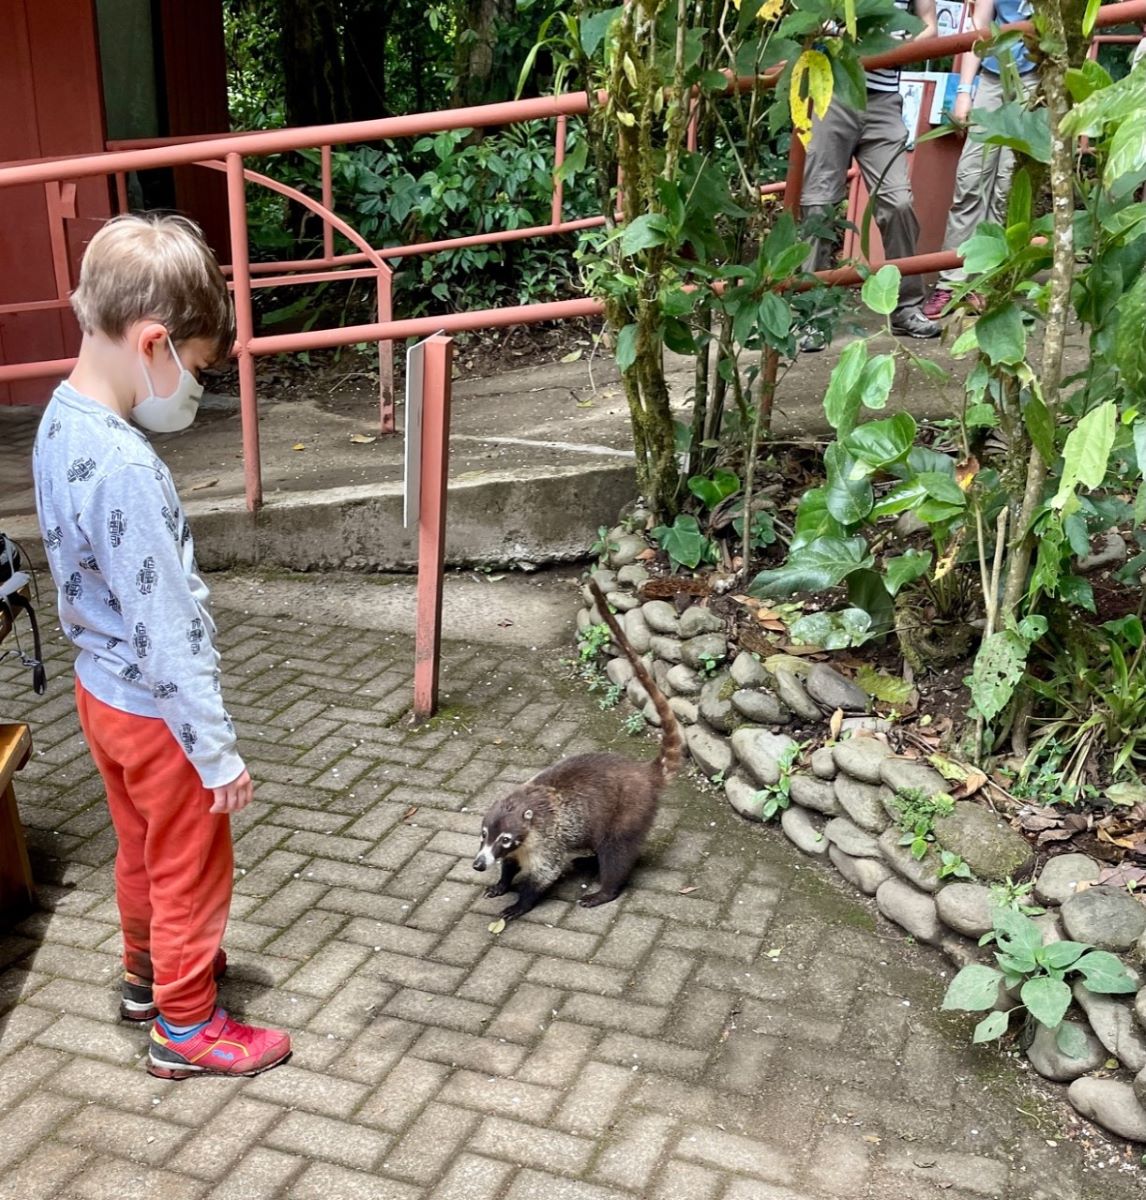 A little boy checking out a coatimundi, a member of Costa Rica's wildlife.